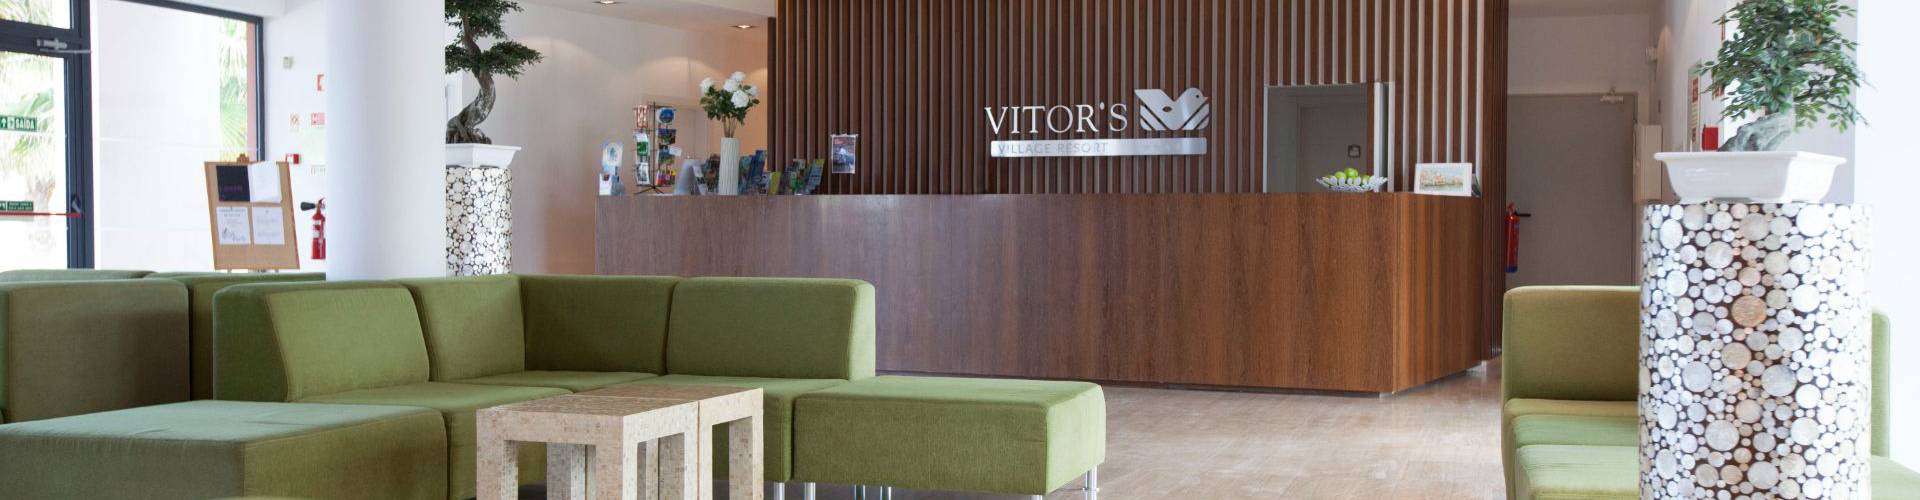 Vitors hotels - Ferragudo - Hotel reviews